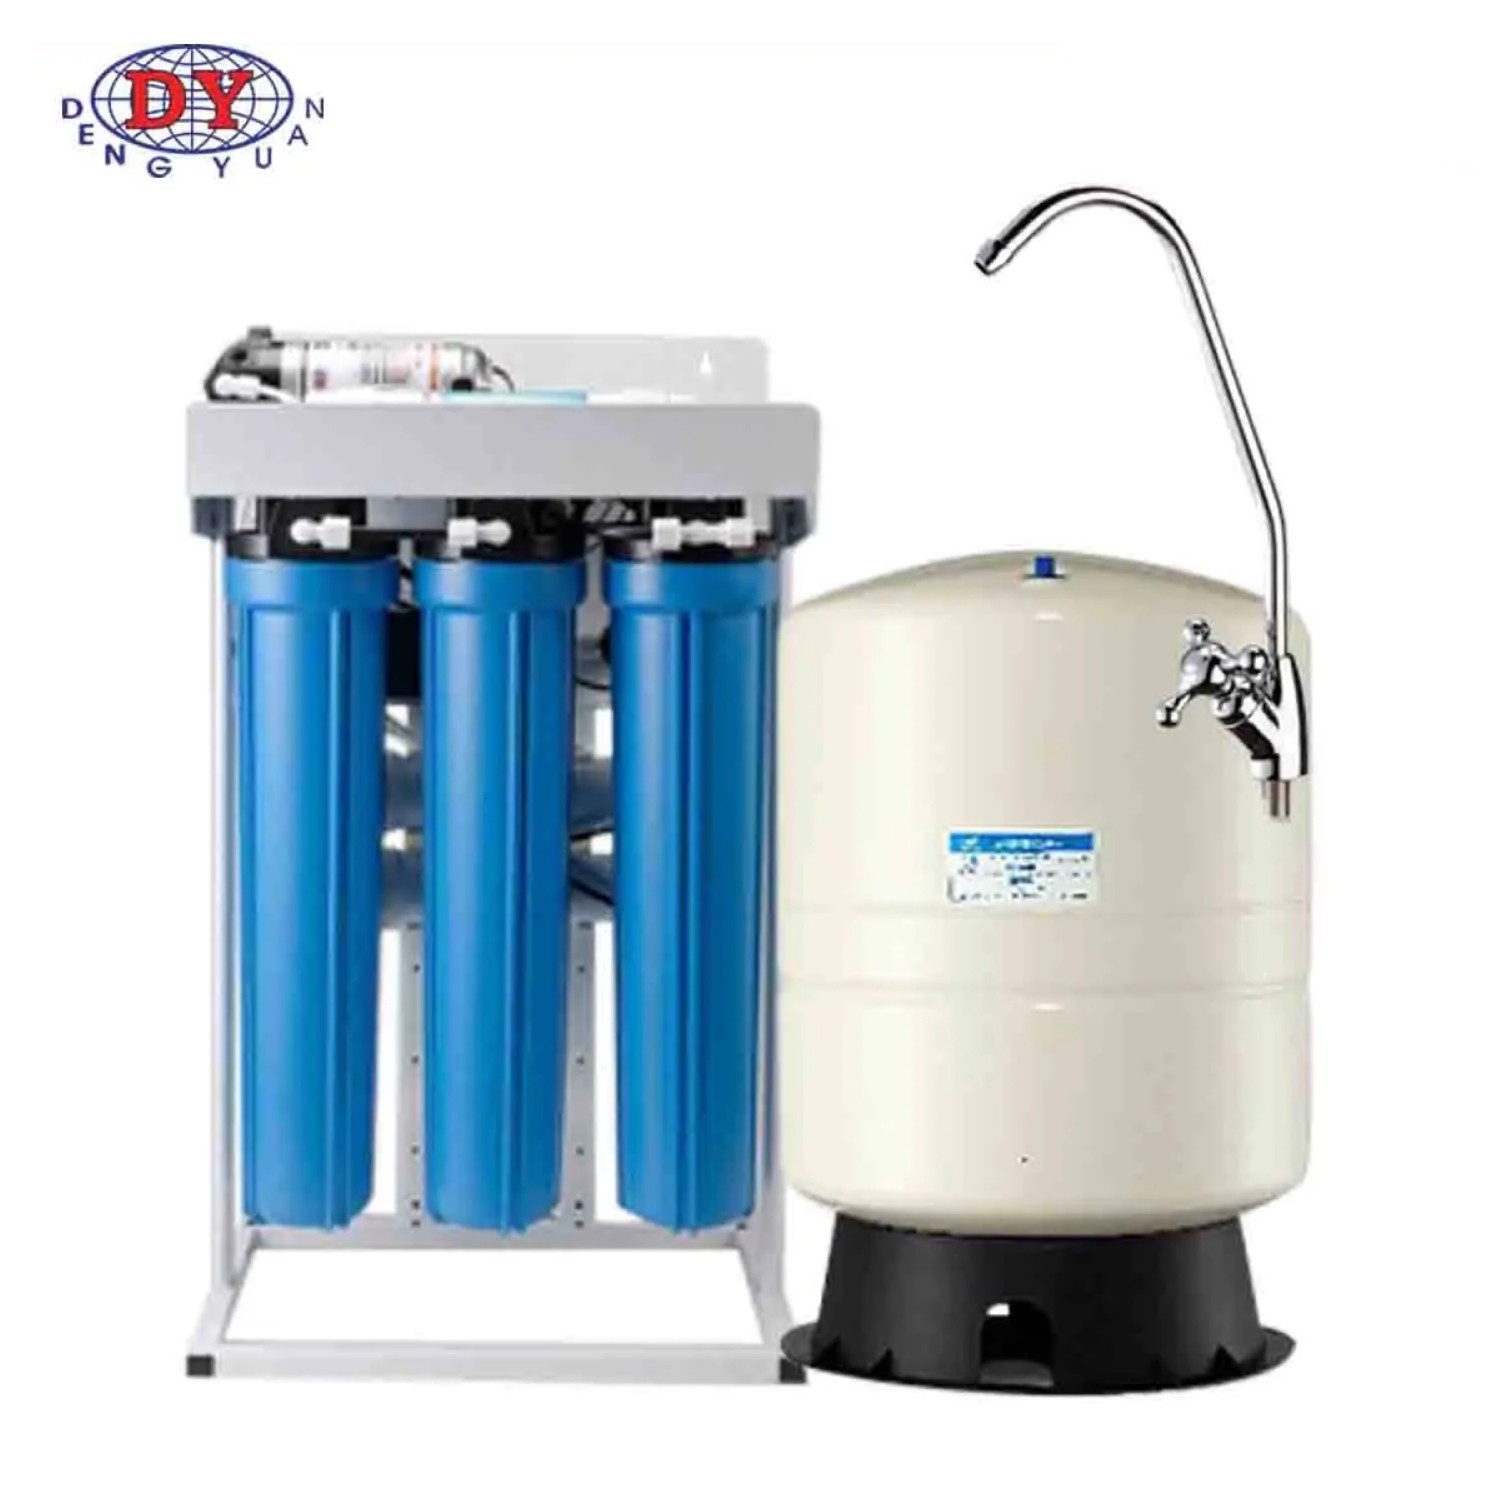 Product Image of Deng Yuan TW-200 RO Made In Taiwan Water Purifier